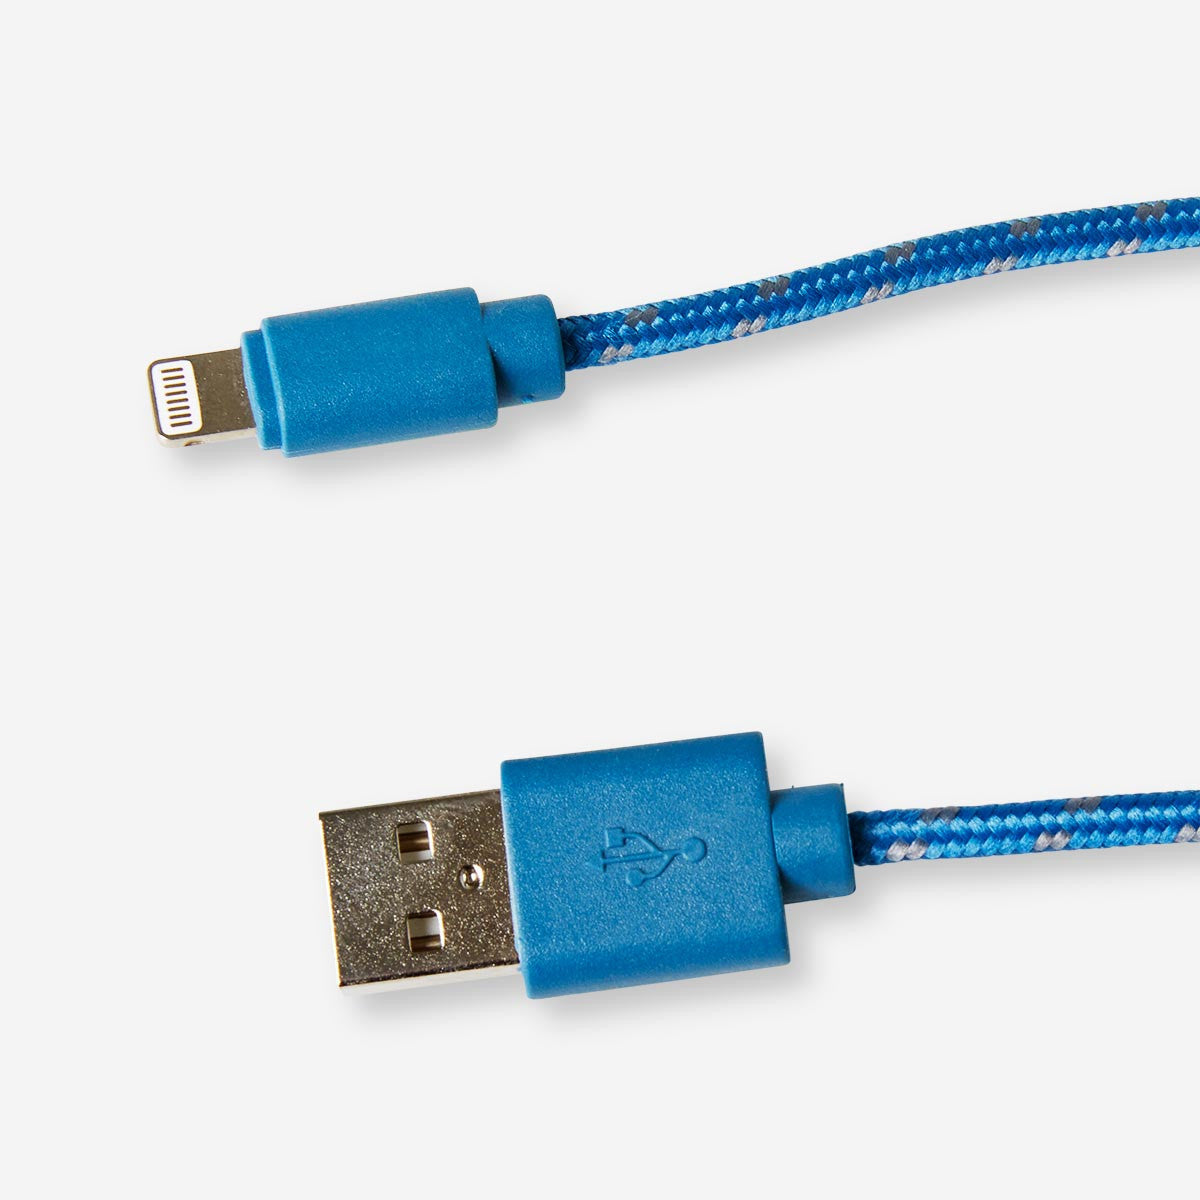 Charging cable. Fits iPhones €4| Flying Tiger Copenhagen